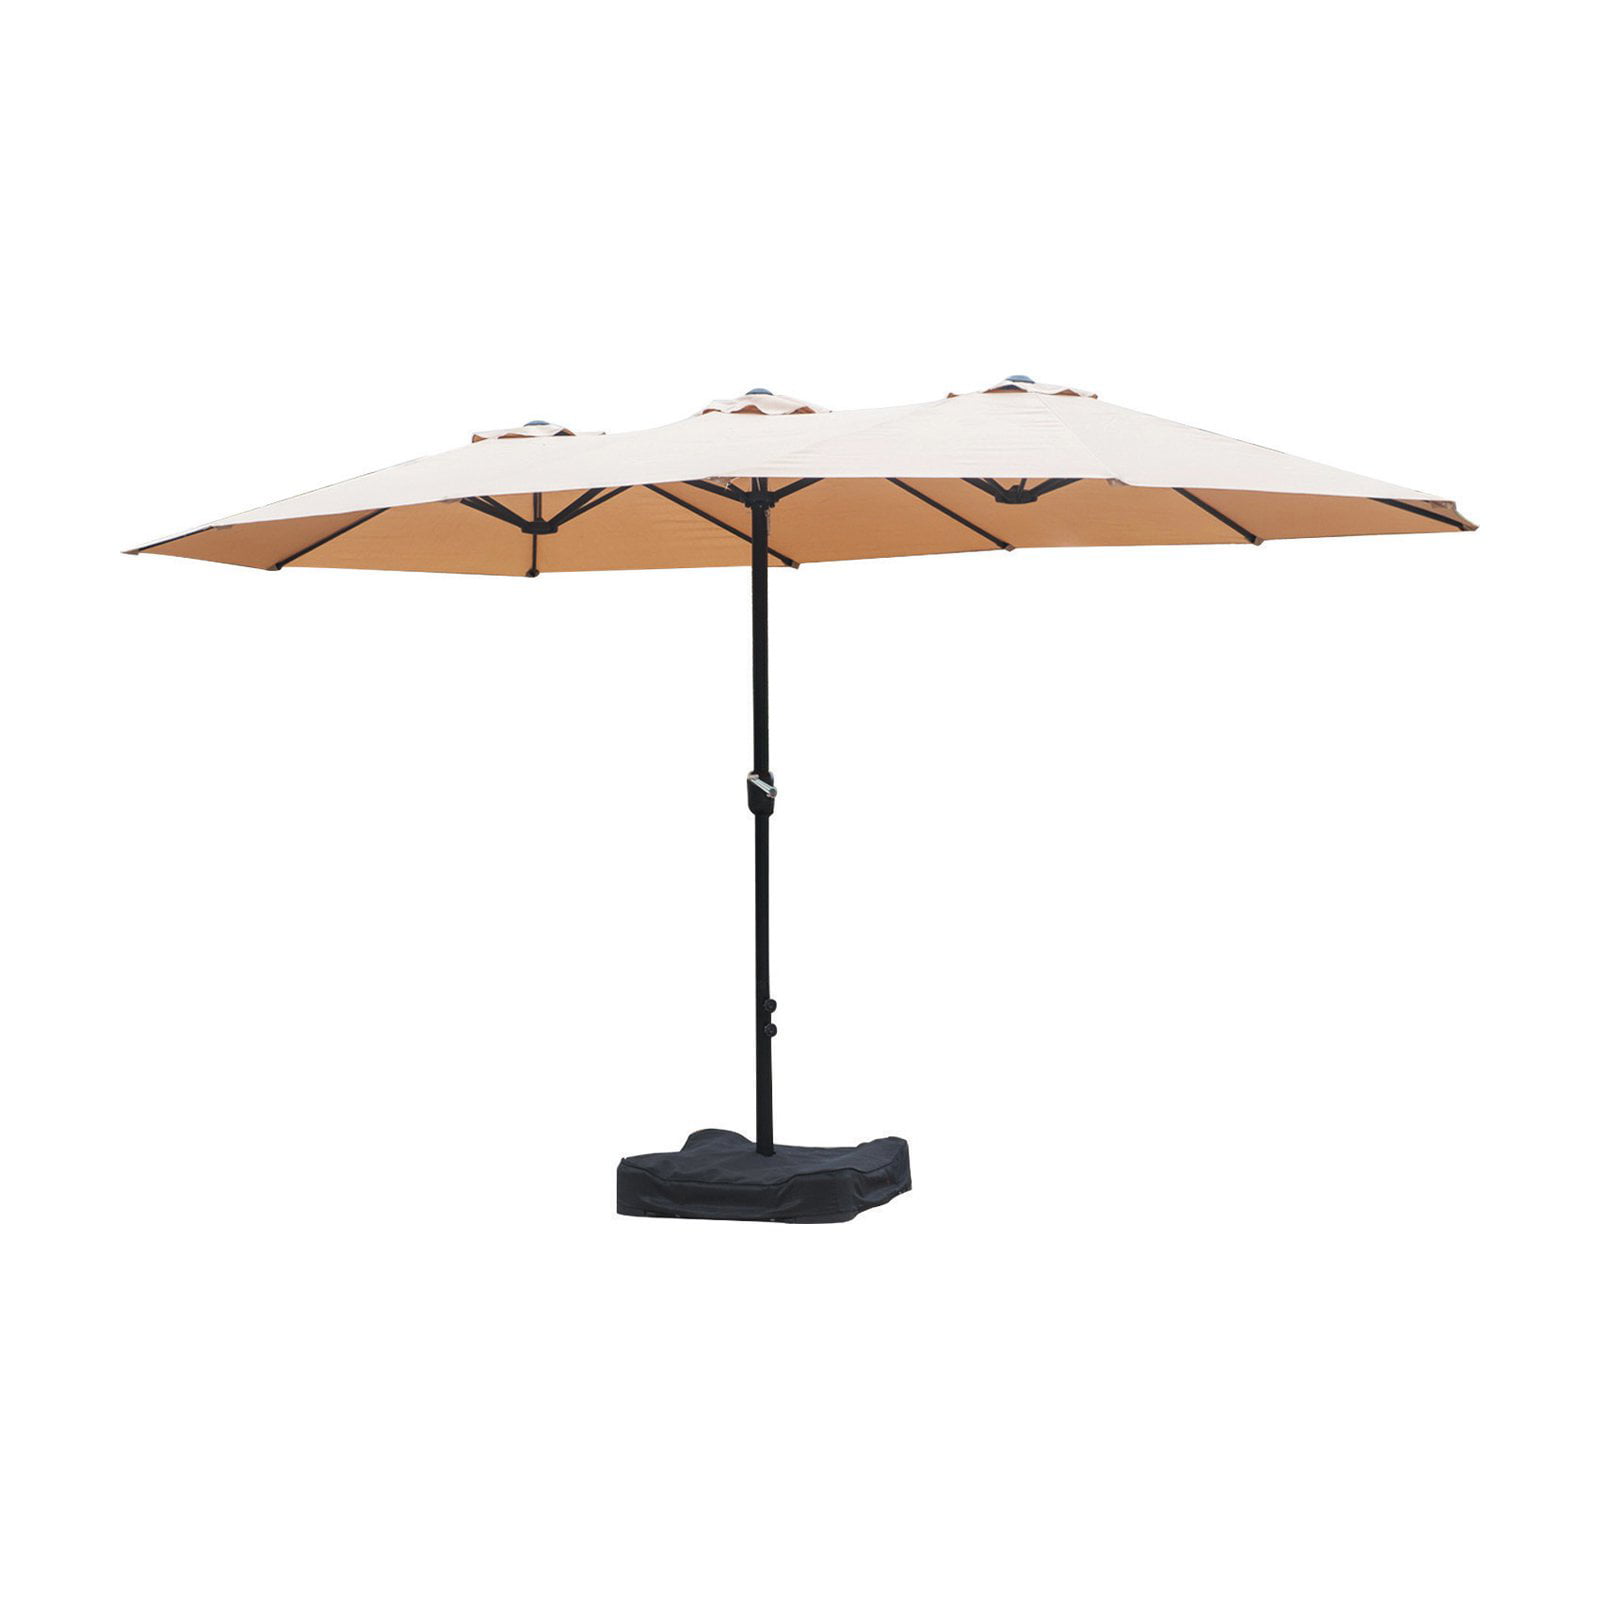 8014534 181.1 In. Tiltable Triple Octagon Patio Umbrella, Canopy